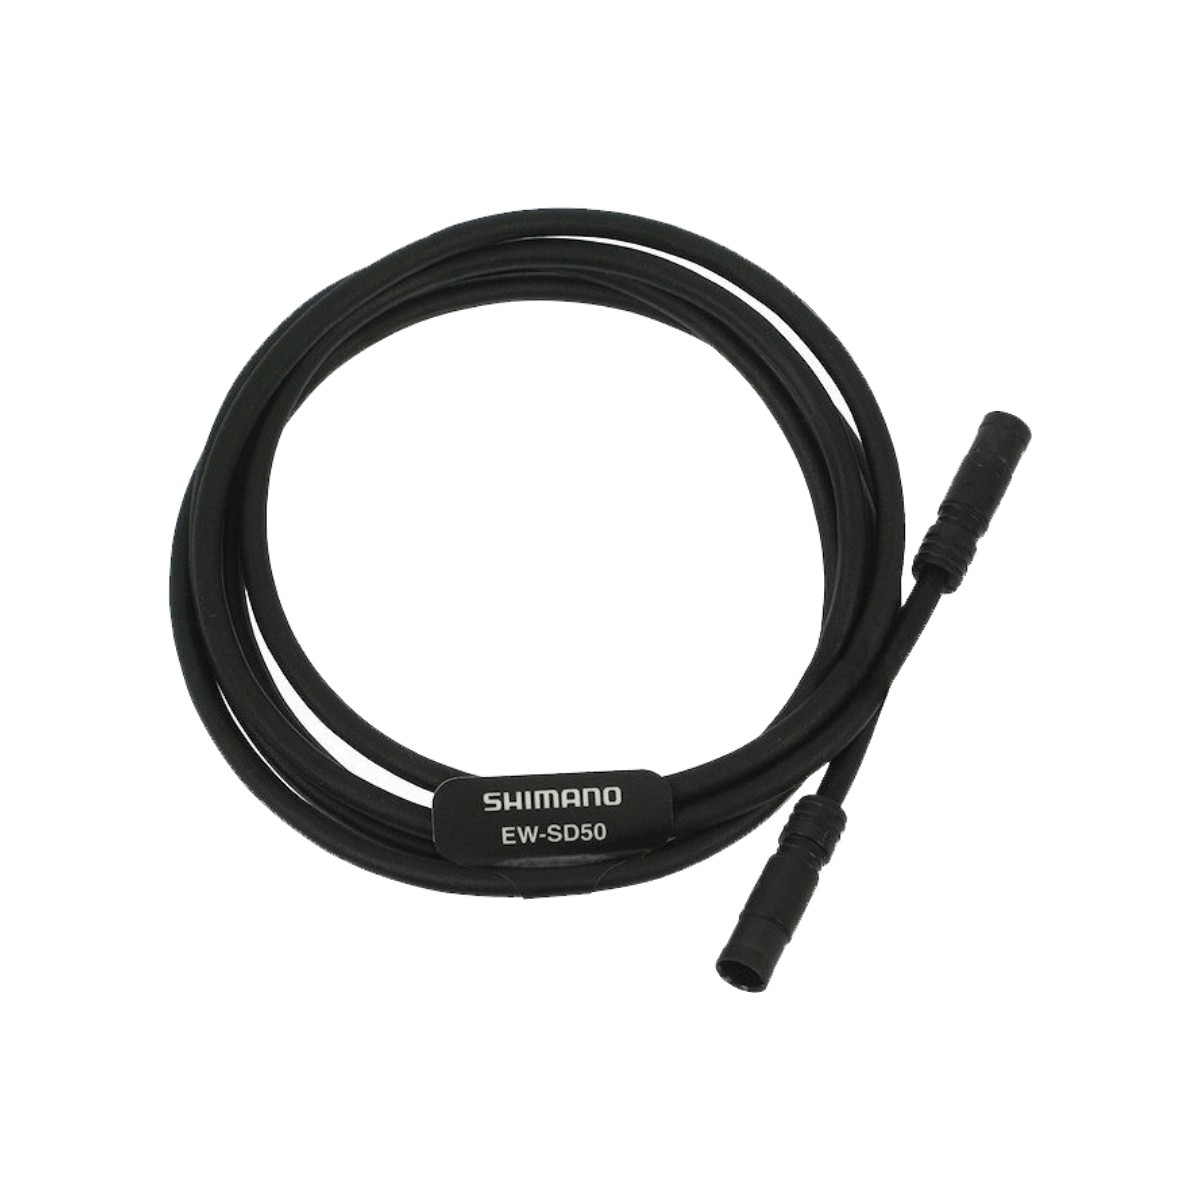 Shimano Di2 EW-SD50 1000mm Power Cable